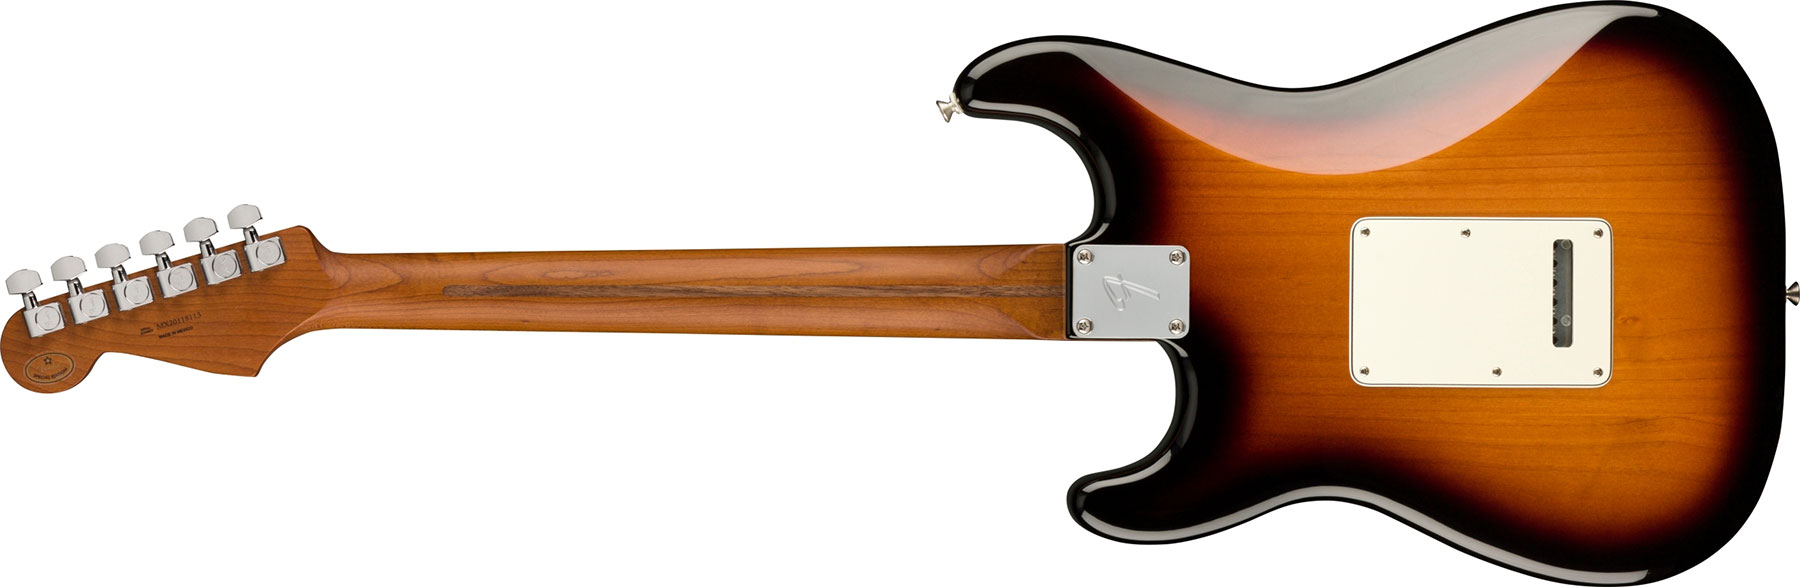 Fender Strat Player 1959 Texas Special Ltd Mex 3s Mn +housse X-tone 2015 Ele-bk - 2-color Sunburst - Elektrische gitaar set - Variation 1